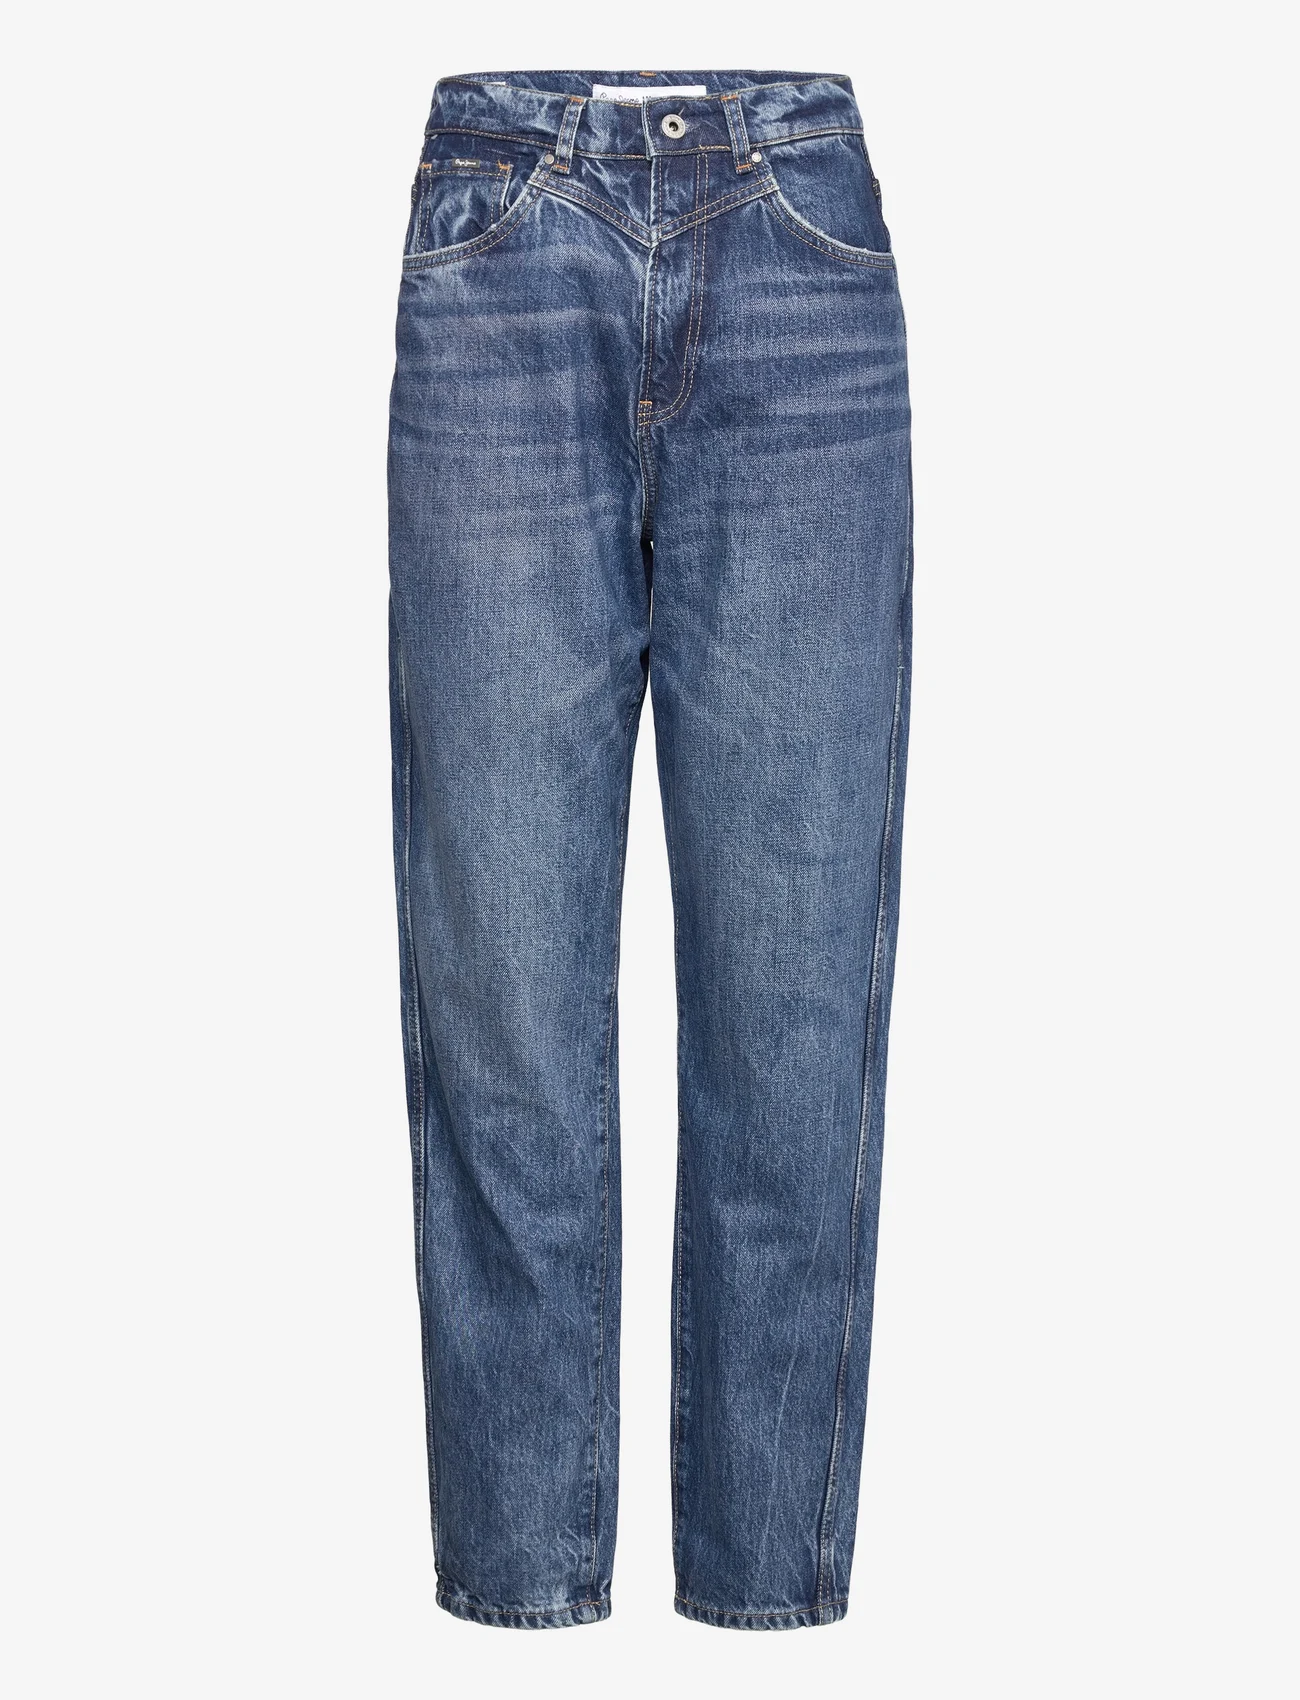 Pepe Jeans London - RACHEL - mom jeans - denim - 0